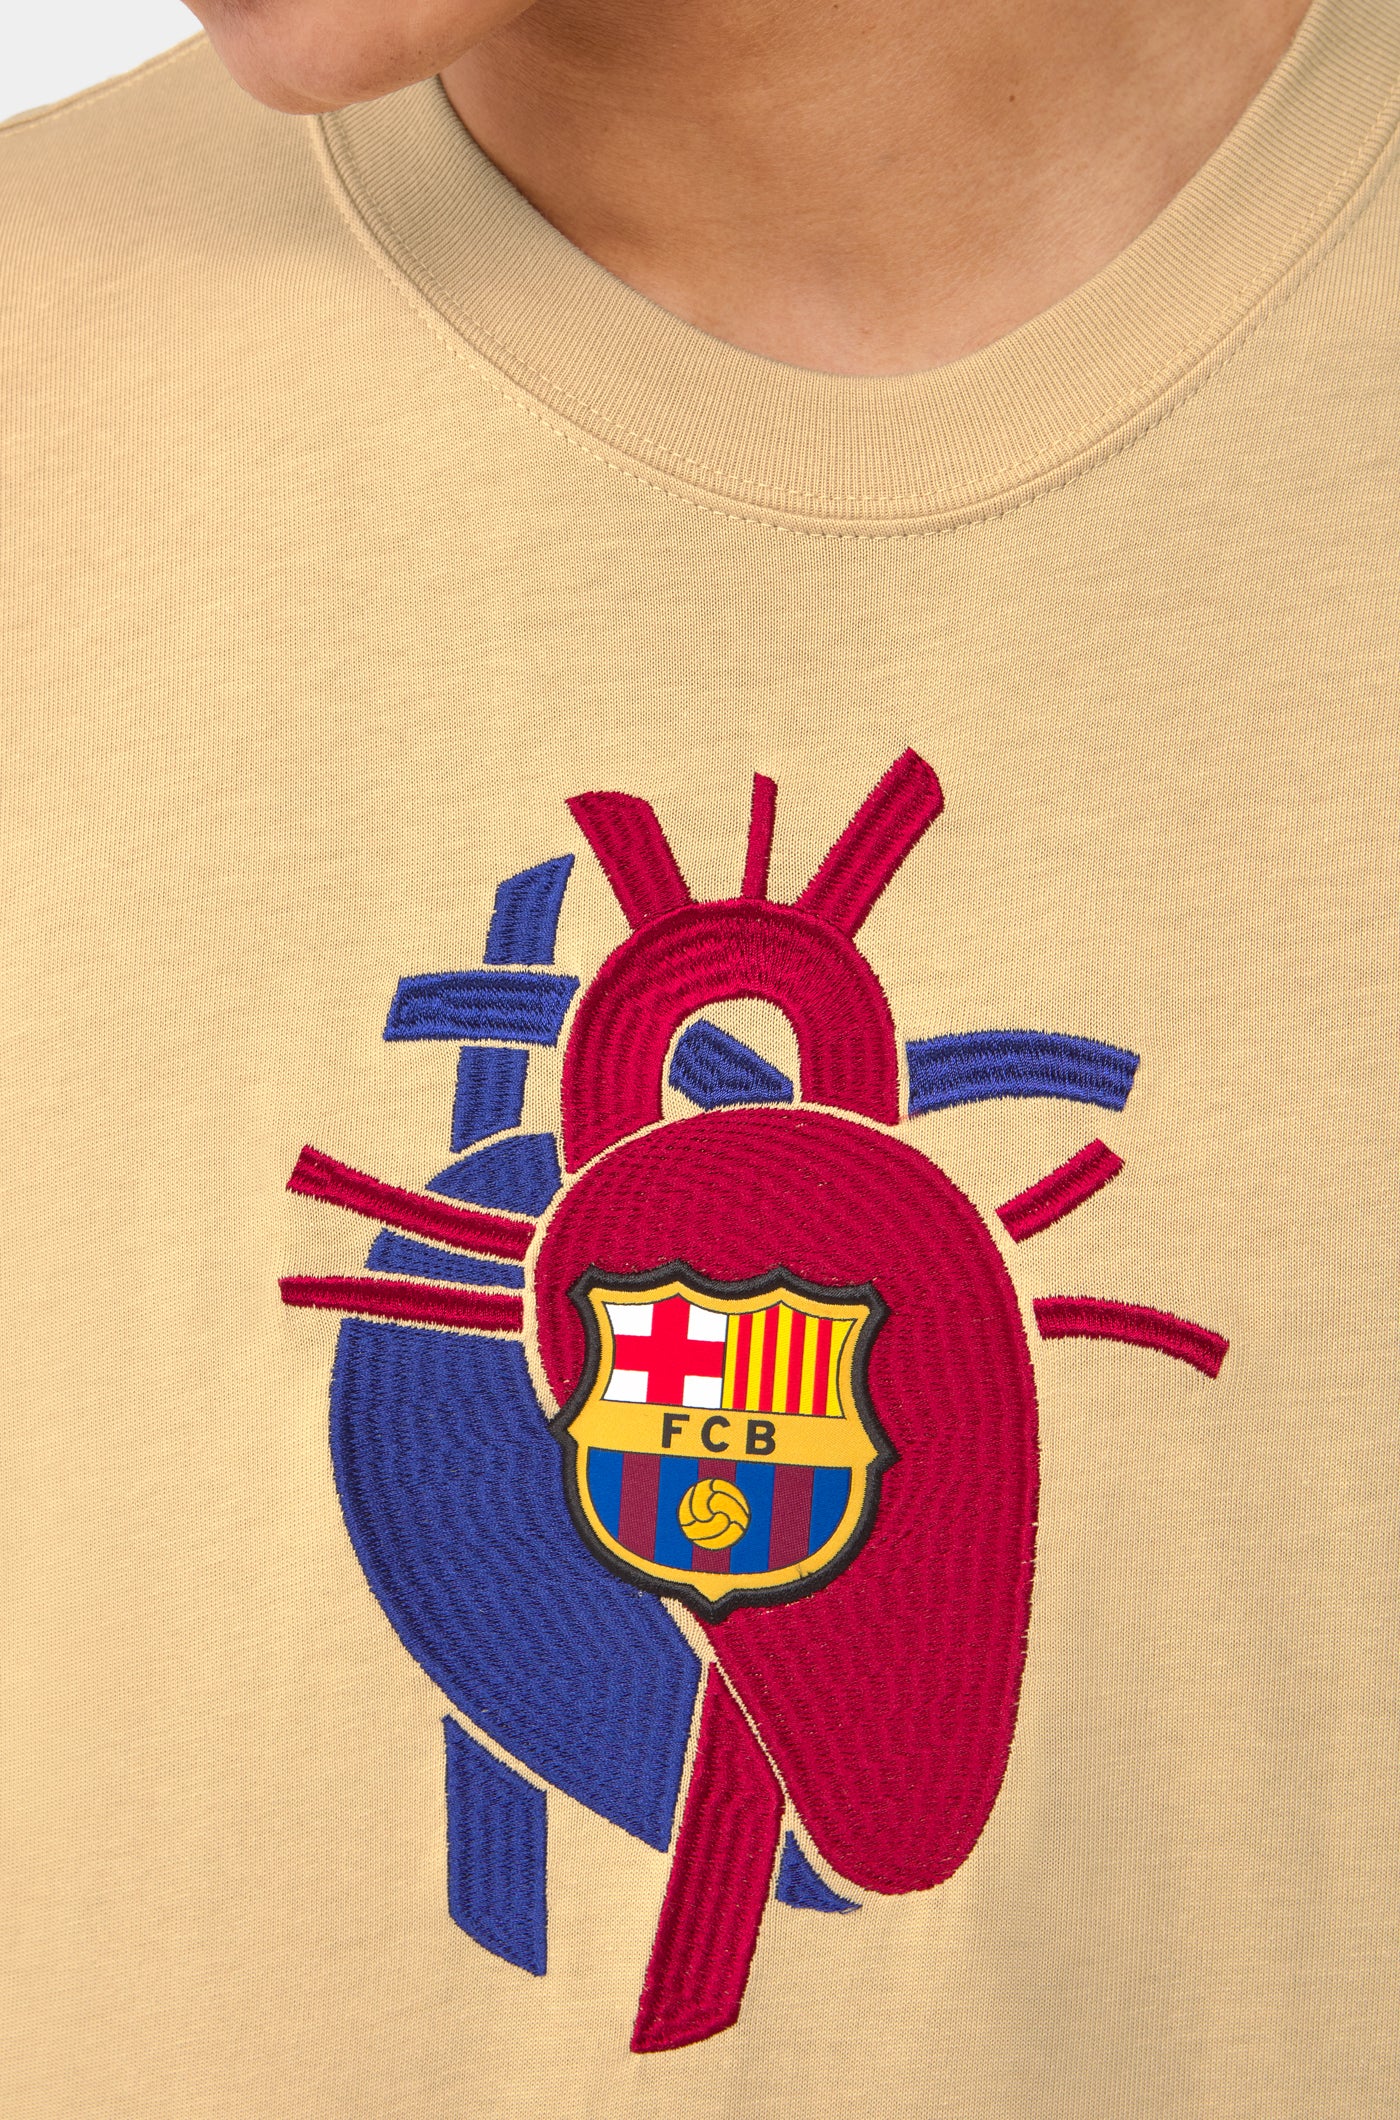 Camiseta FC Barcelona x Patta en color sésamo